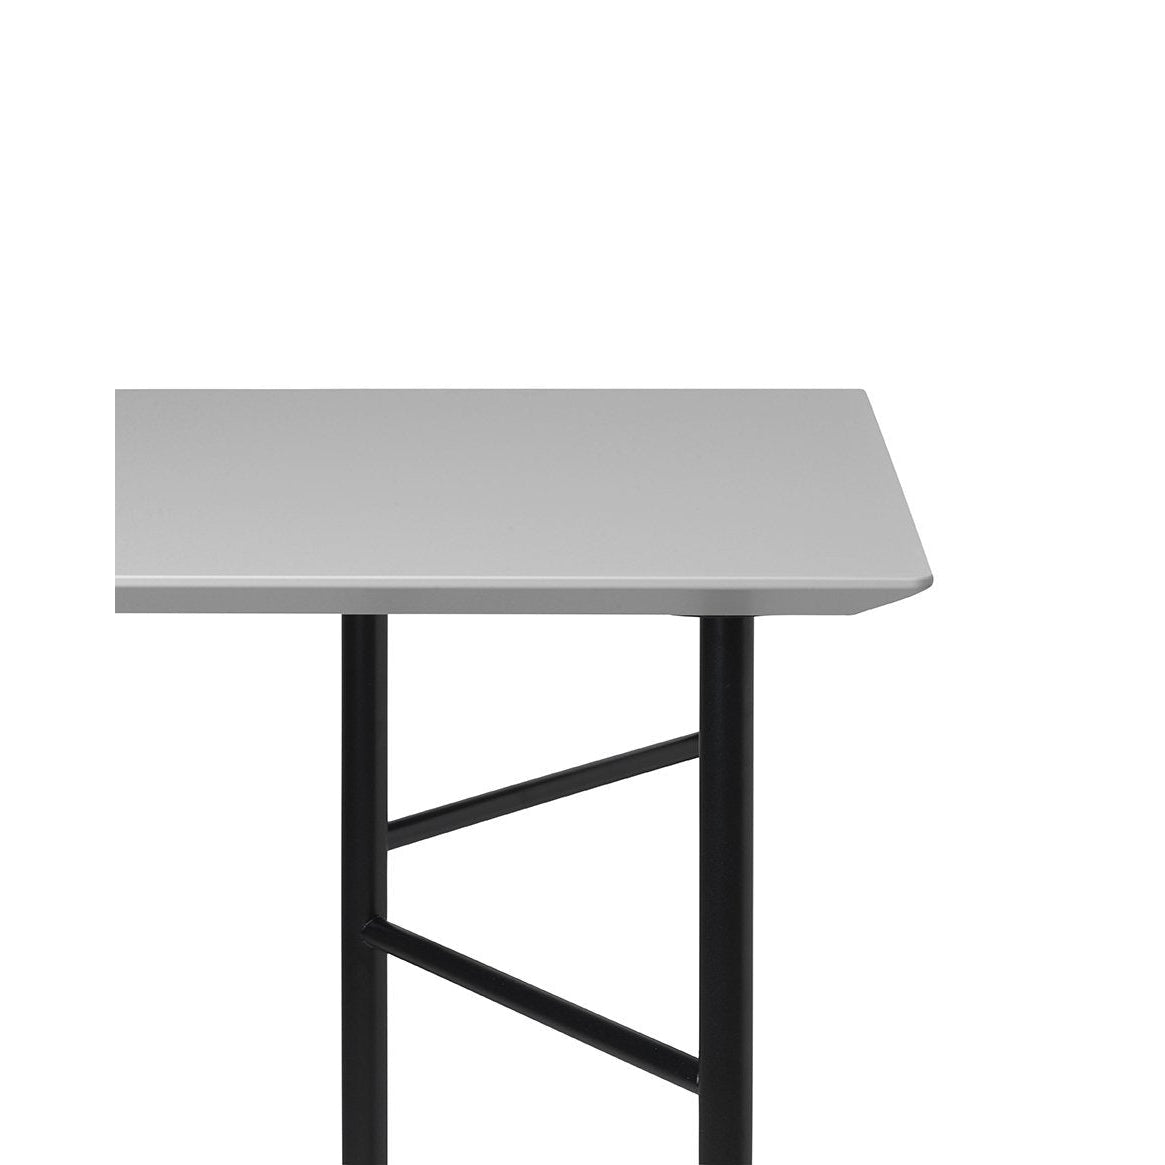 Ferm Living Mingle Desk Top, Light Gray, 135 cm